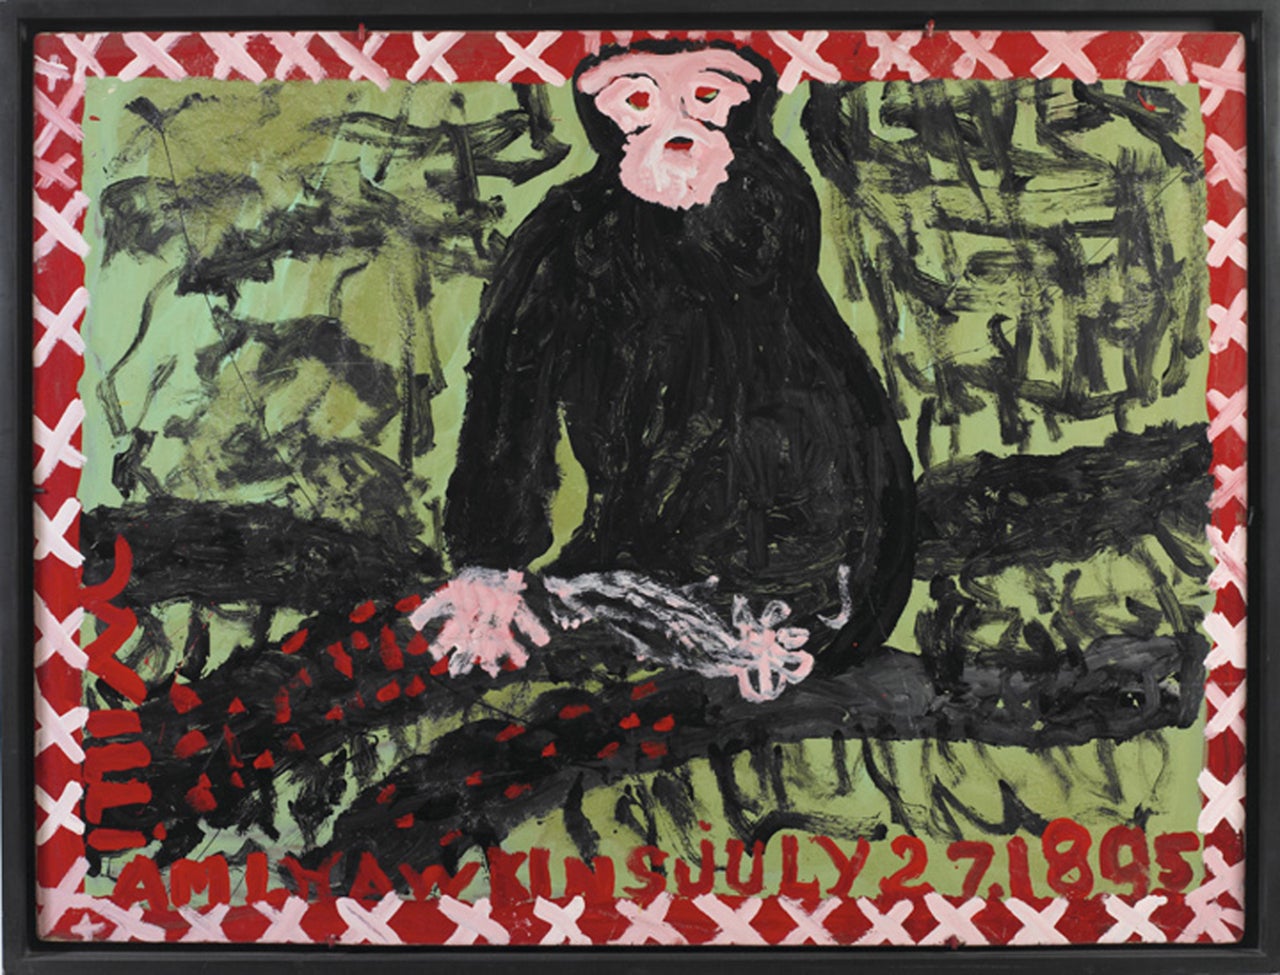 Monkey on a Limb - Painting by William L. Hawkins